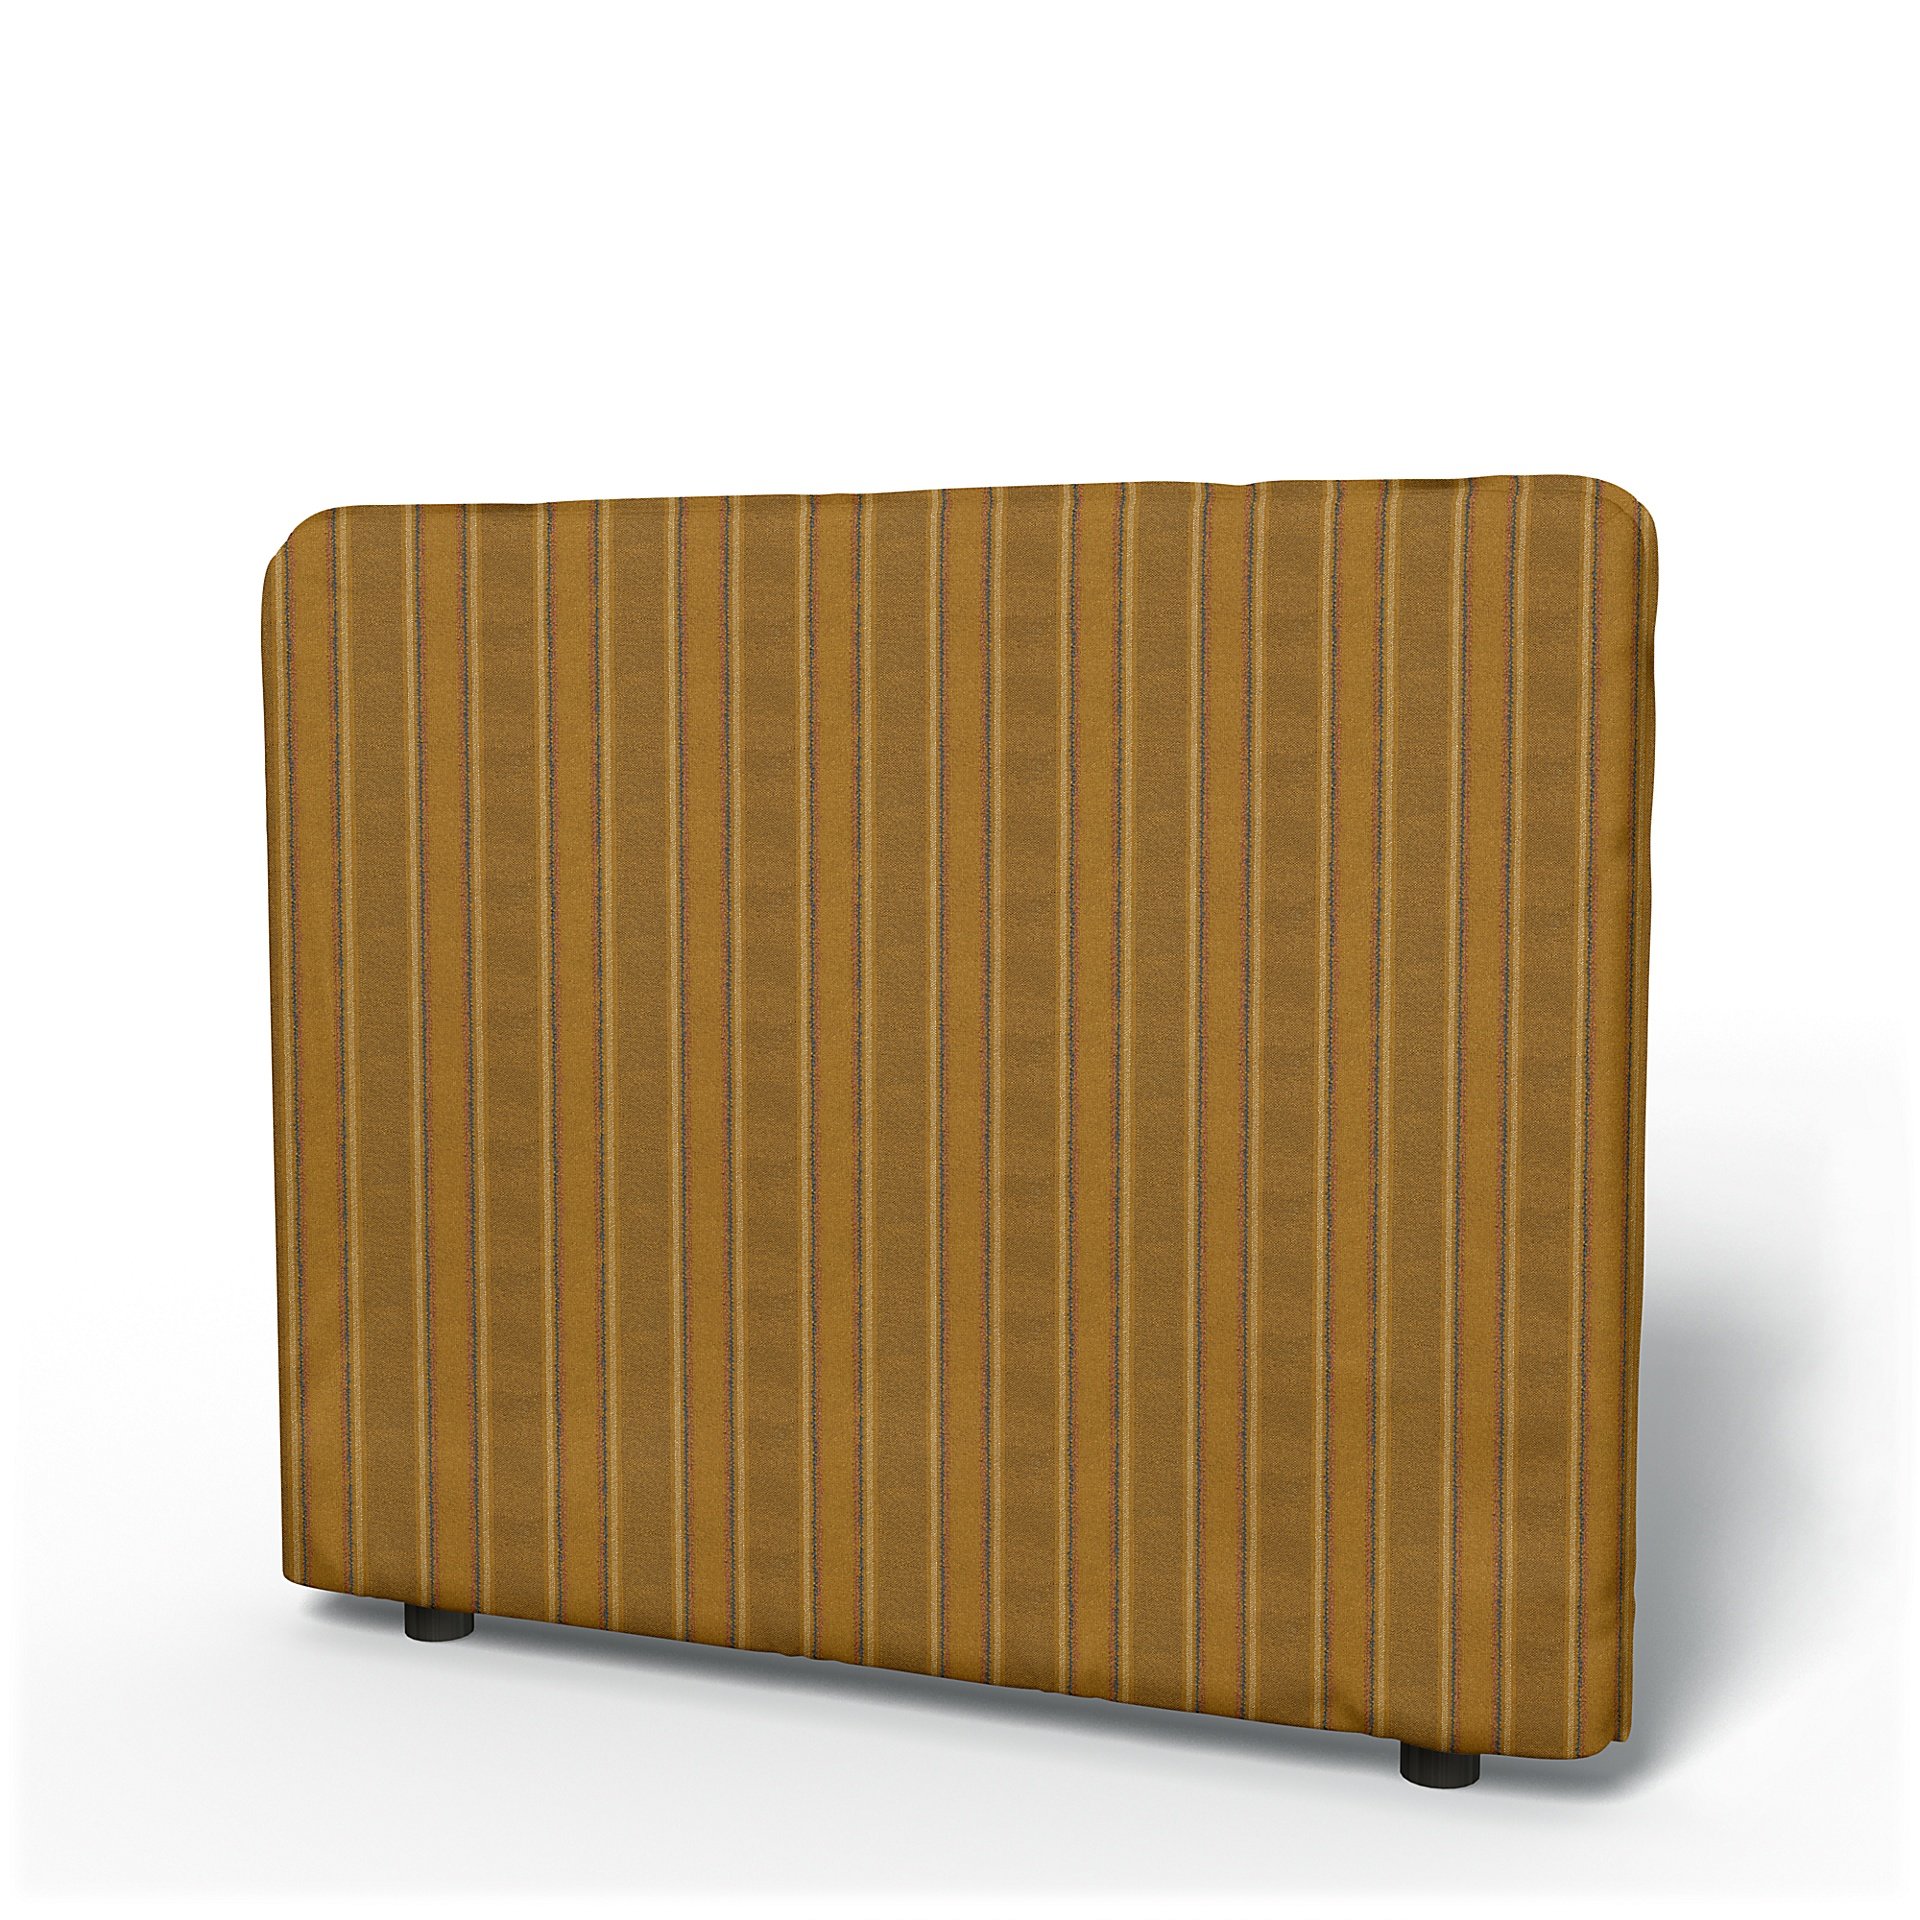 IKEA - Vallentuna Low Backrest Cover 100x80cm 39x32in, Mustard Stripe, Cotton - Bemz